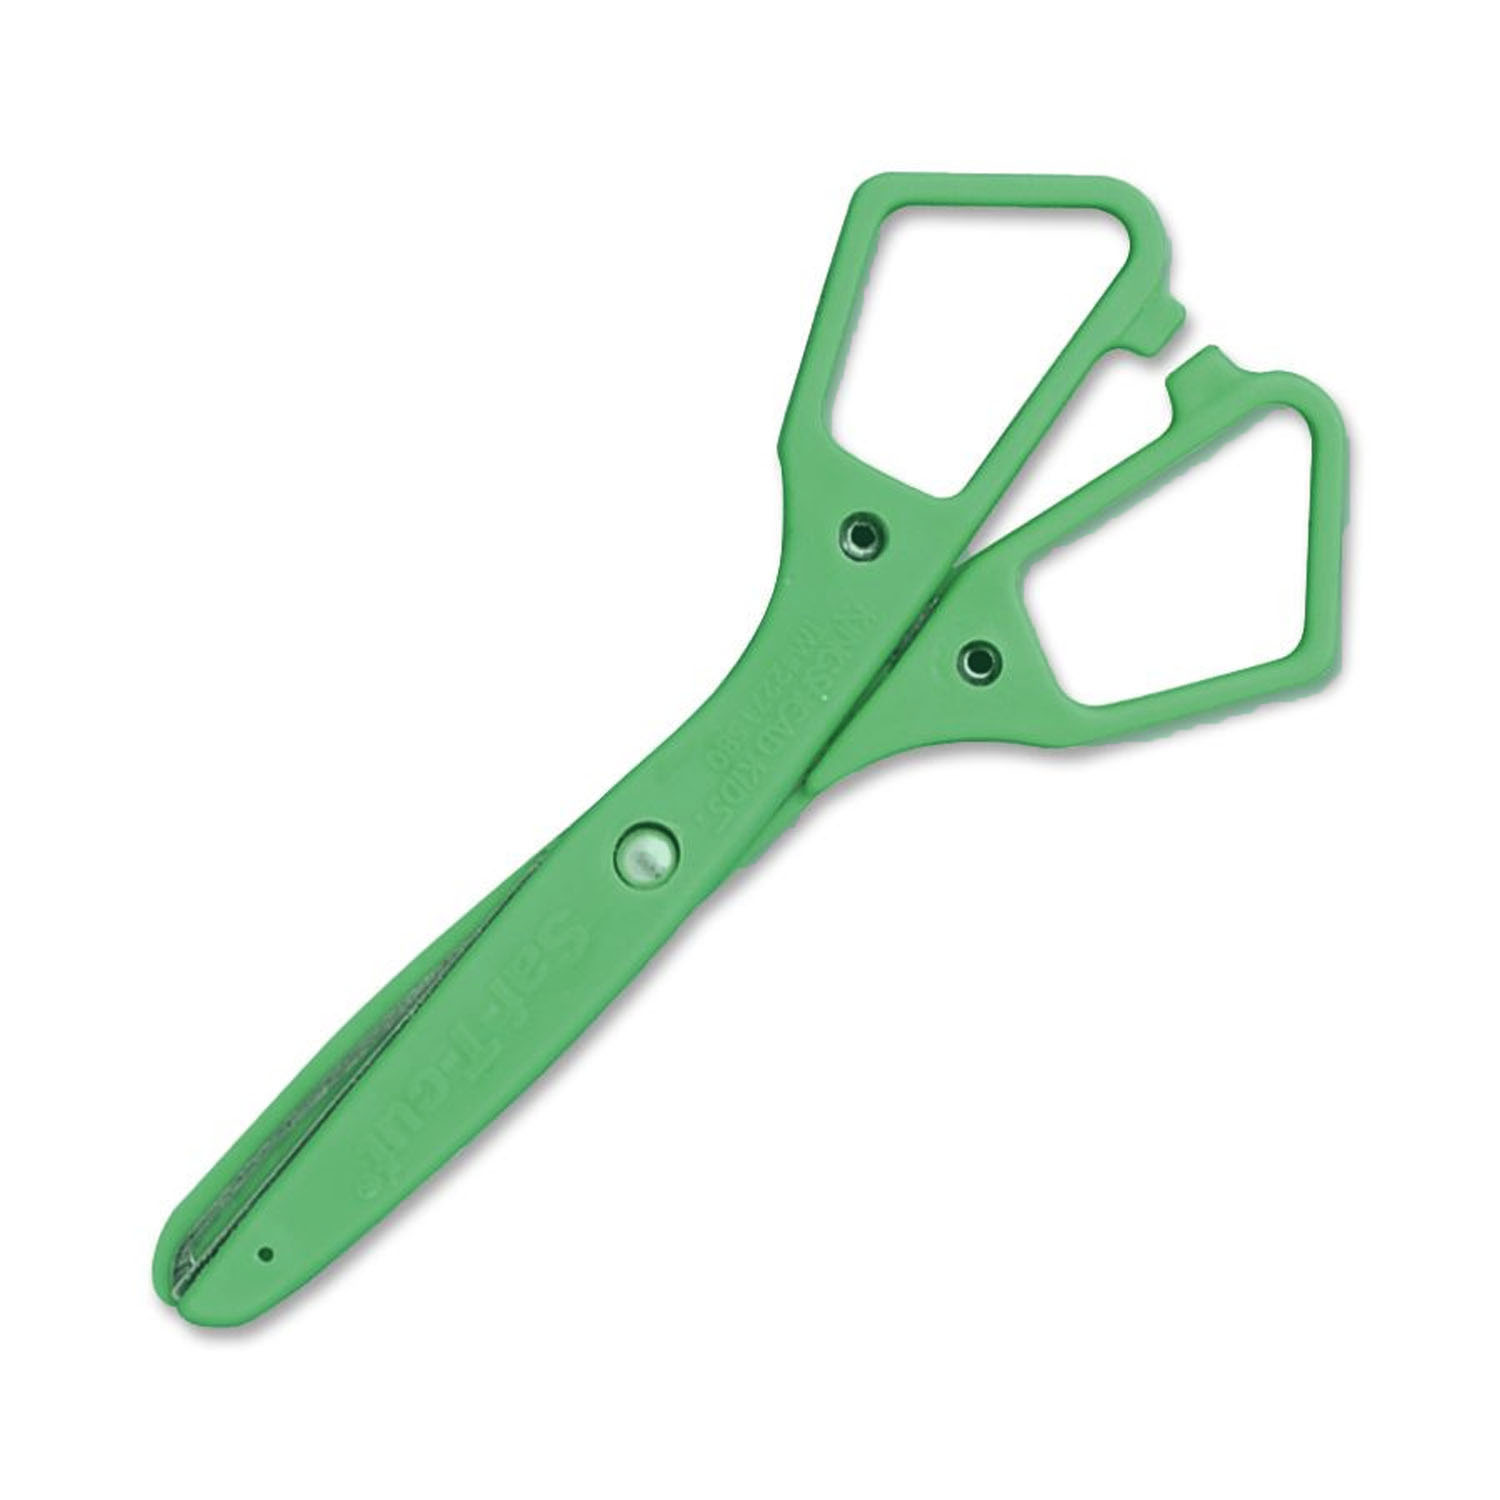 Saf-T-cut Scissors, 5-1/2" Blunt, Pack of 12